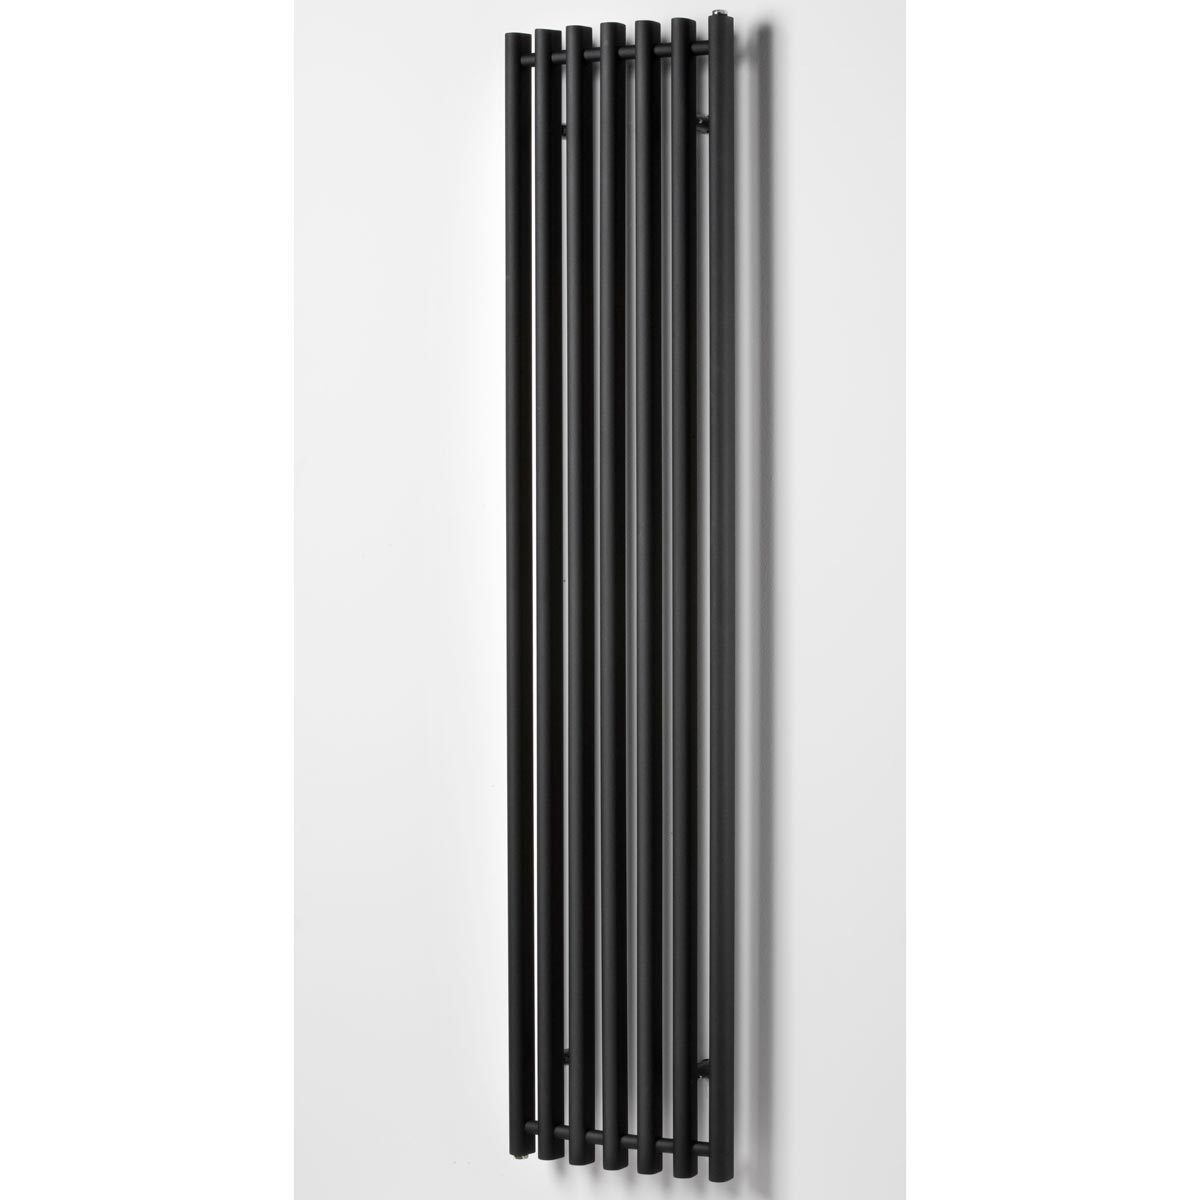 Side on image of radiator against white background